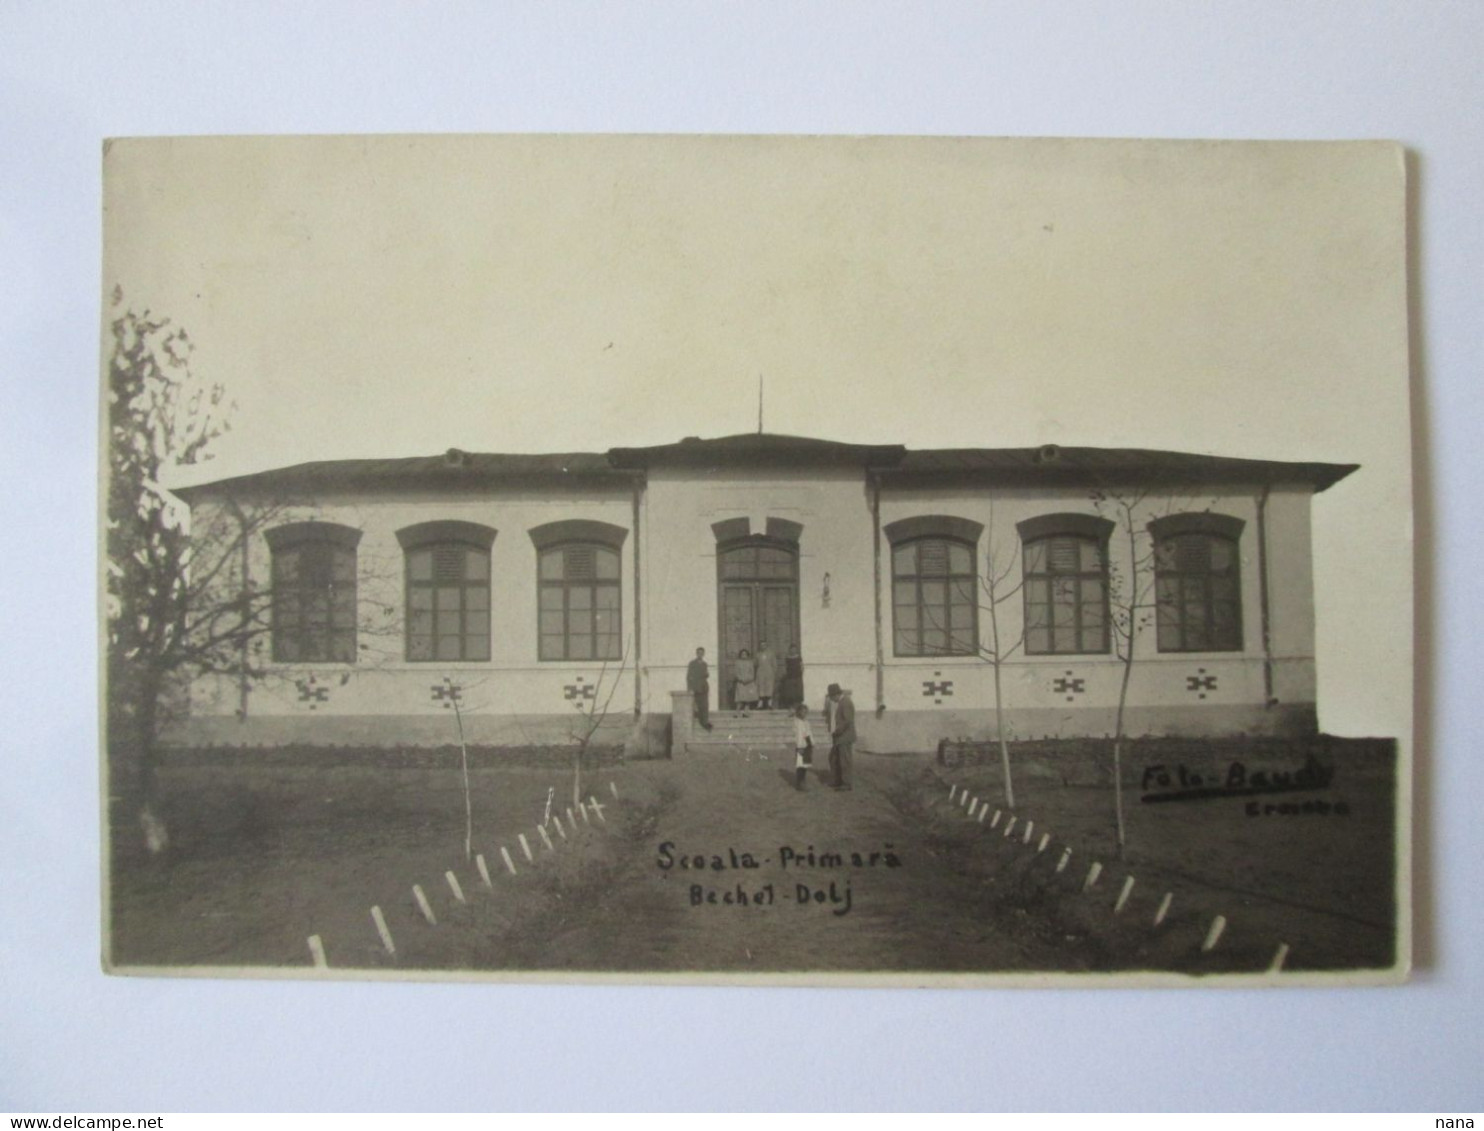 Rare! Romania-Bechet(Dolj):Ecole Primaire,carte Photo Voyage 1928/Primary School 1928 Written Photo Postcard - Romania